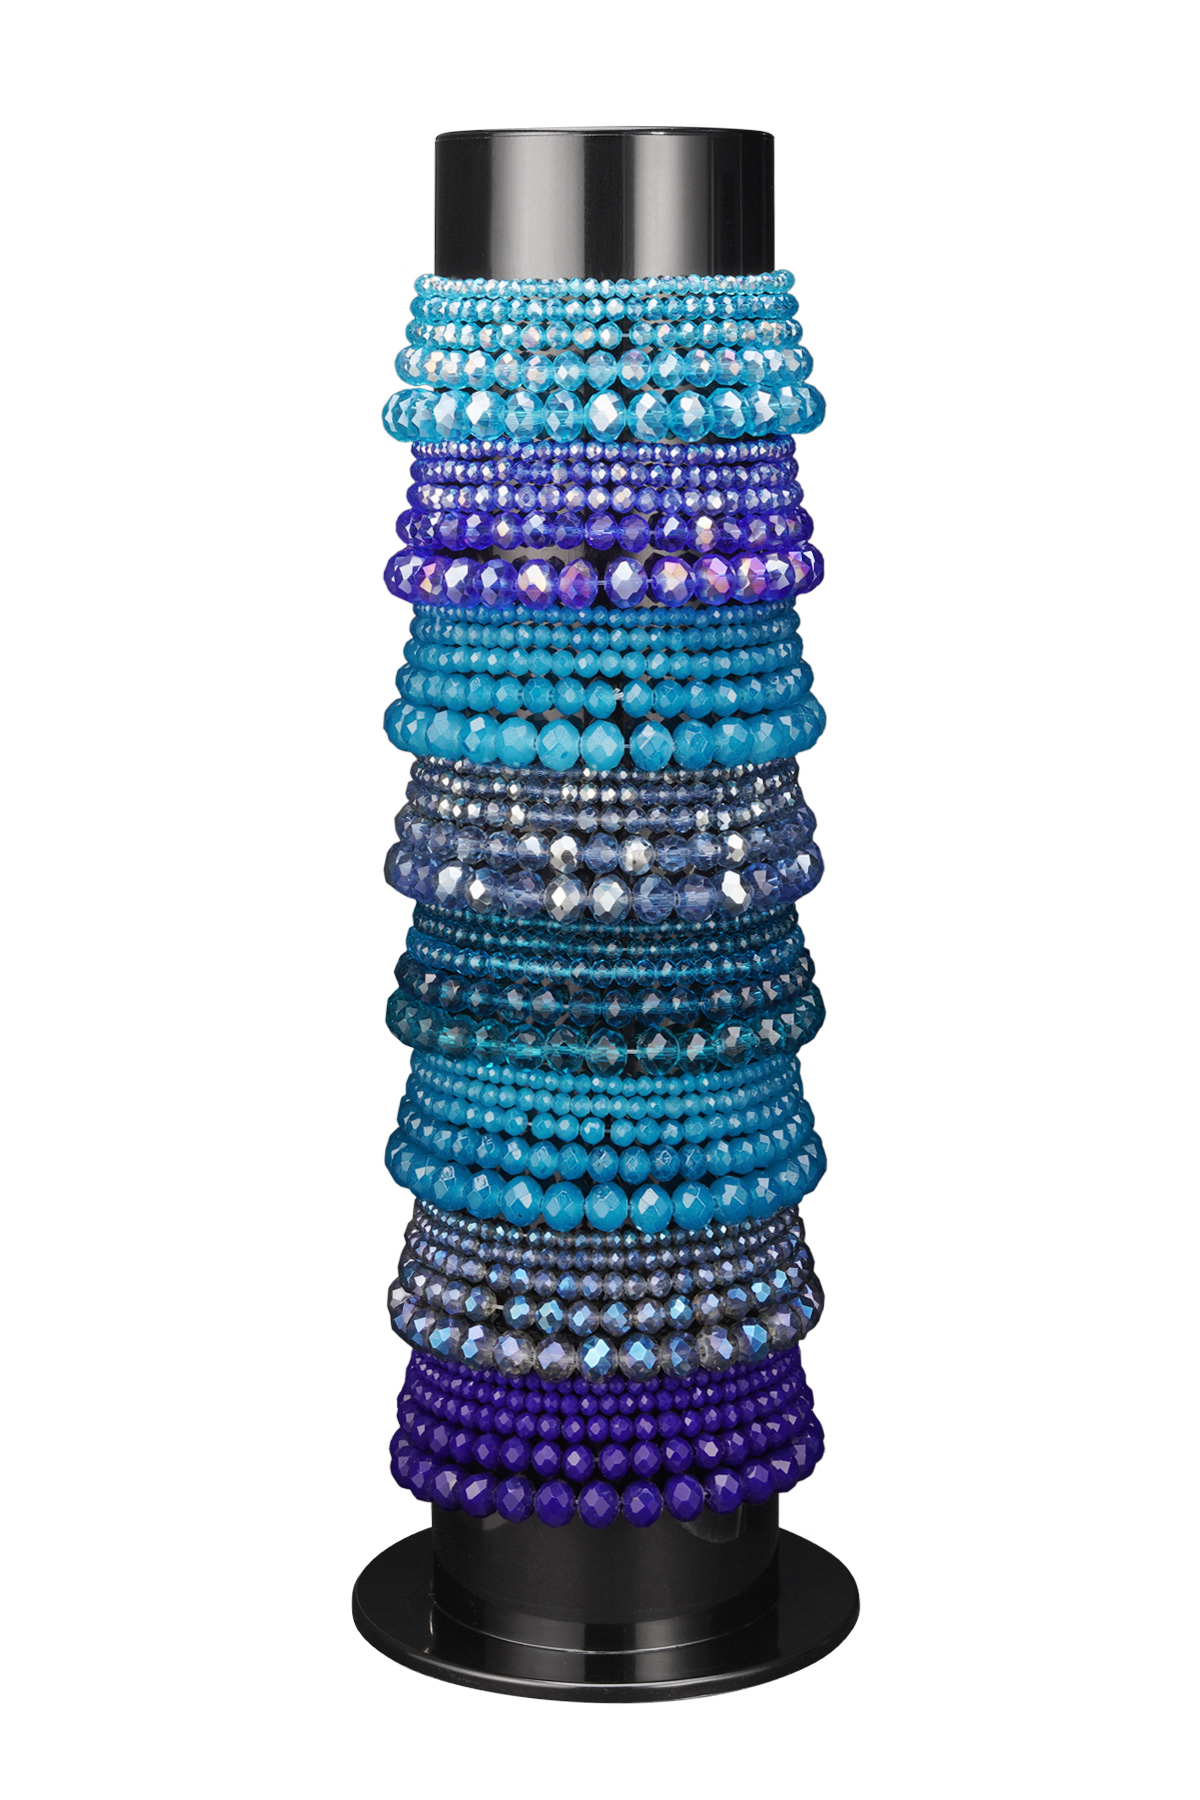 Bracelet display with glass bead bracelets - blue